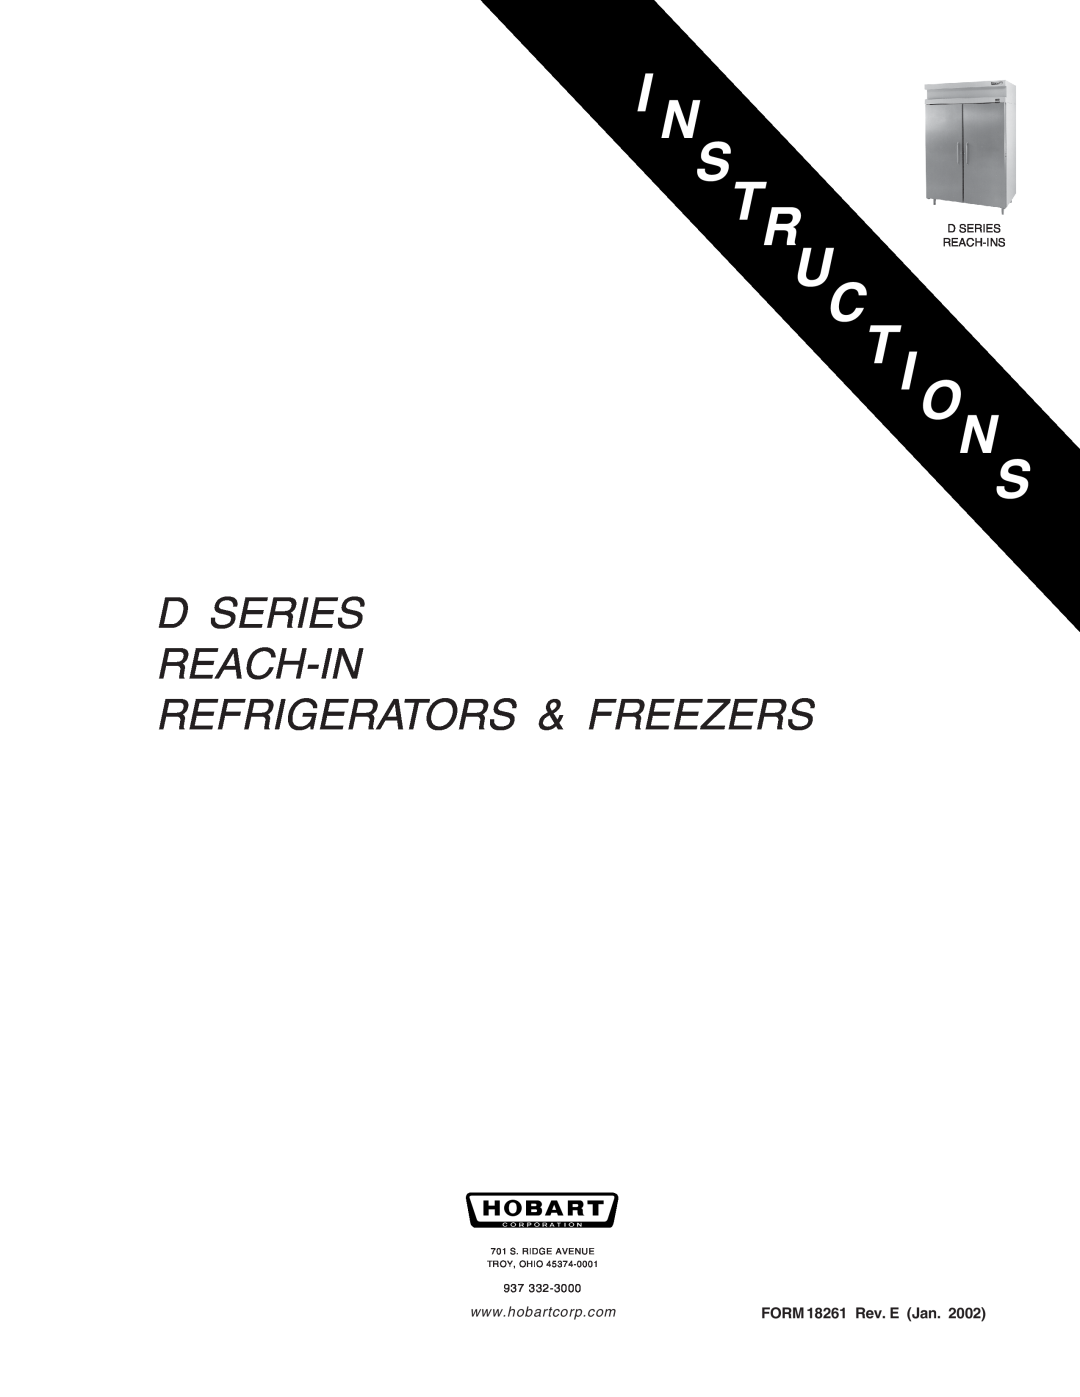 Hobart D Series manual I N S, Dseries Reach-Inrefrigerators & Freezers, FORM 18261 Rev. E Jan, Reach-Ins 